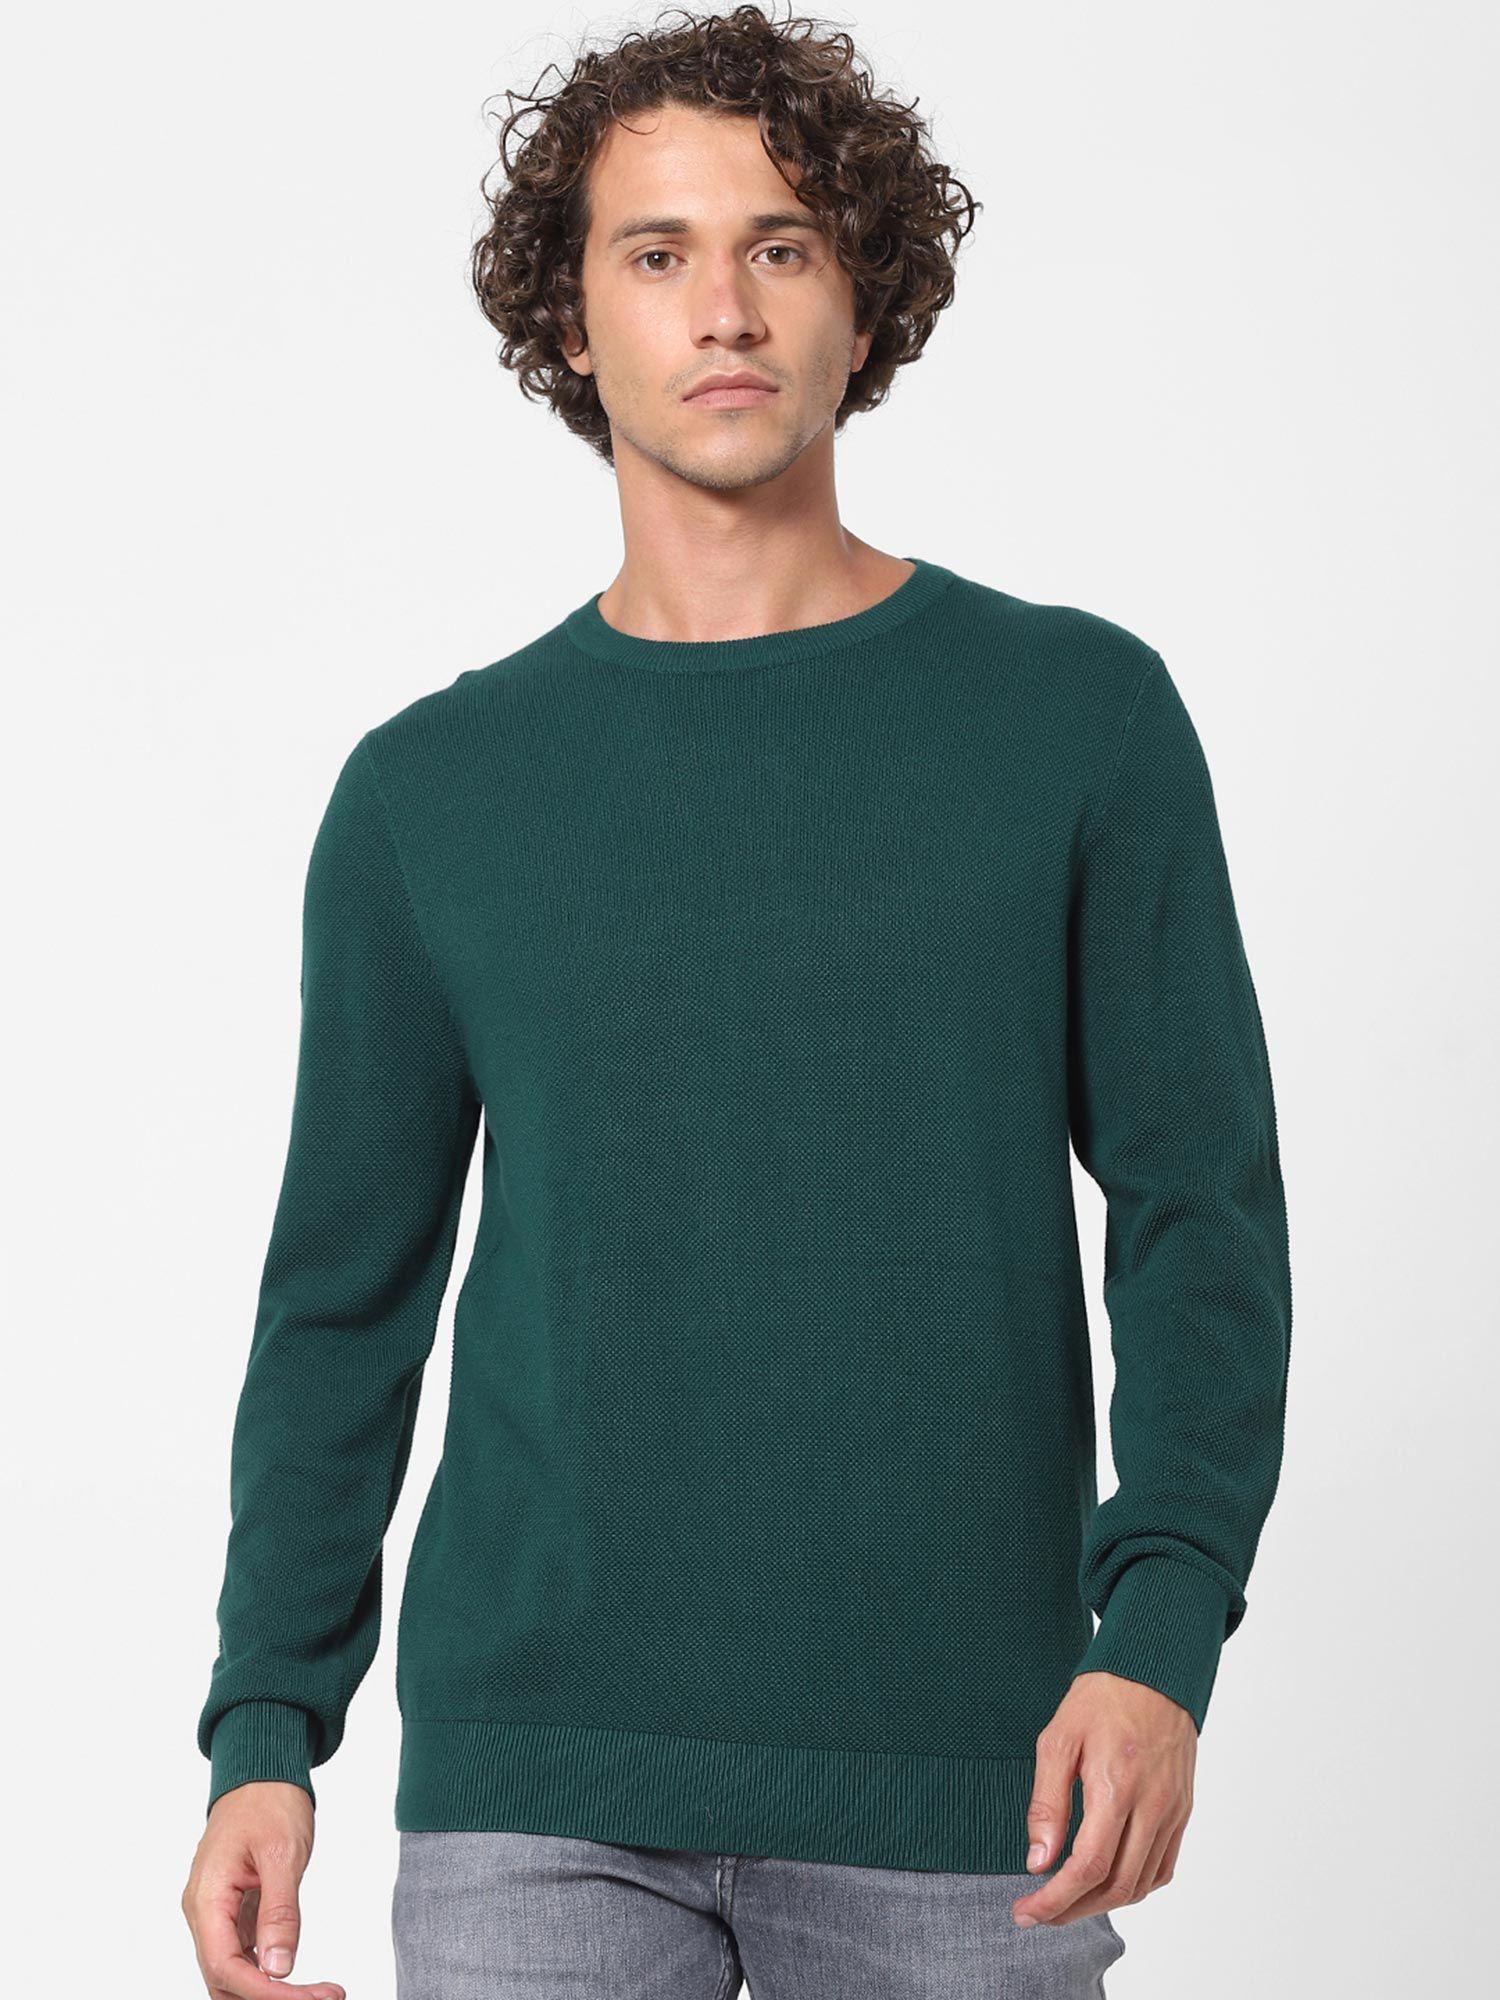 Men's Green Sweaters